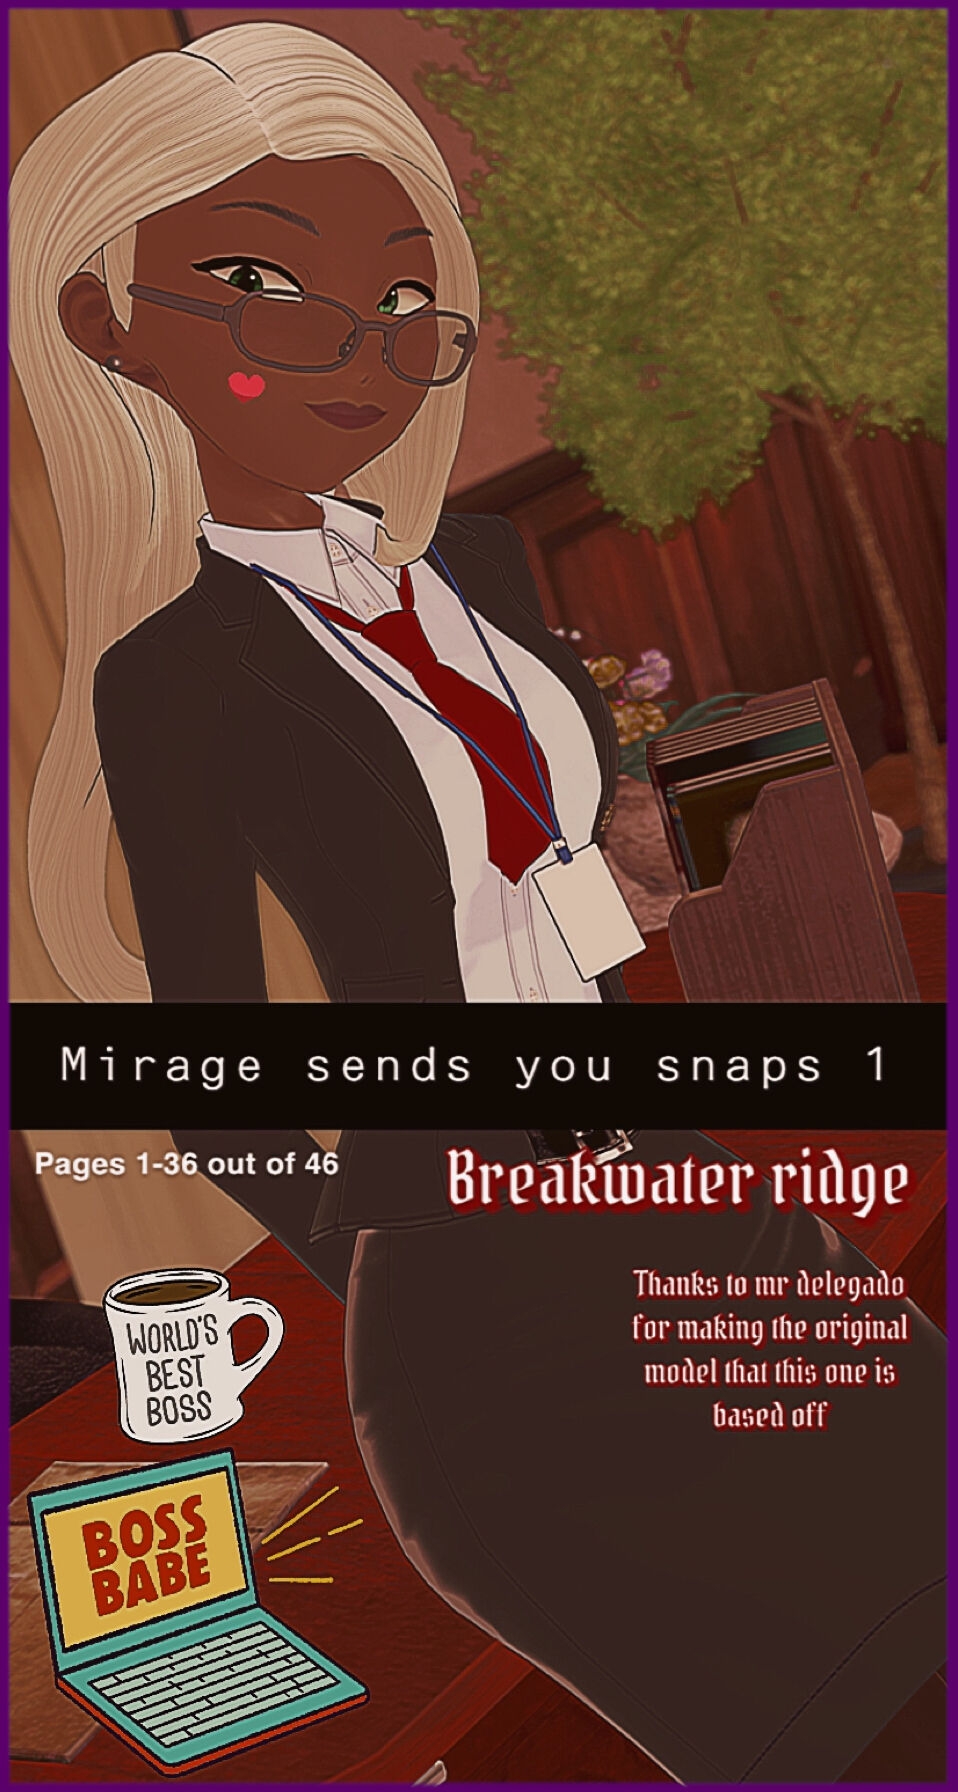 Mirage Sends you snaps (Breakwater ridge) 0